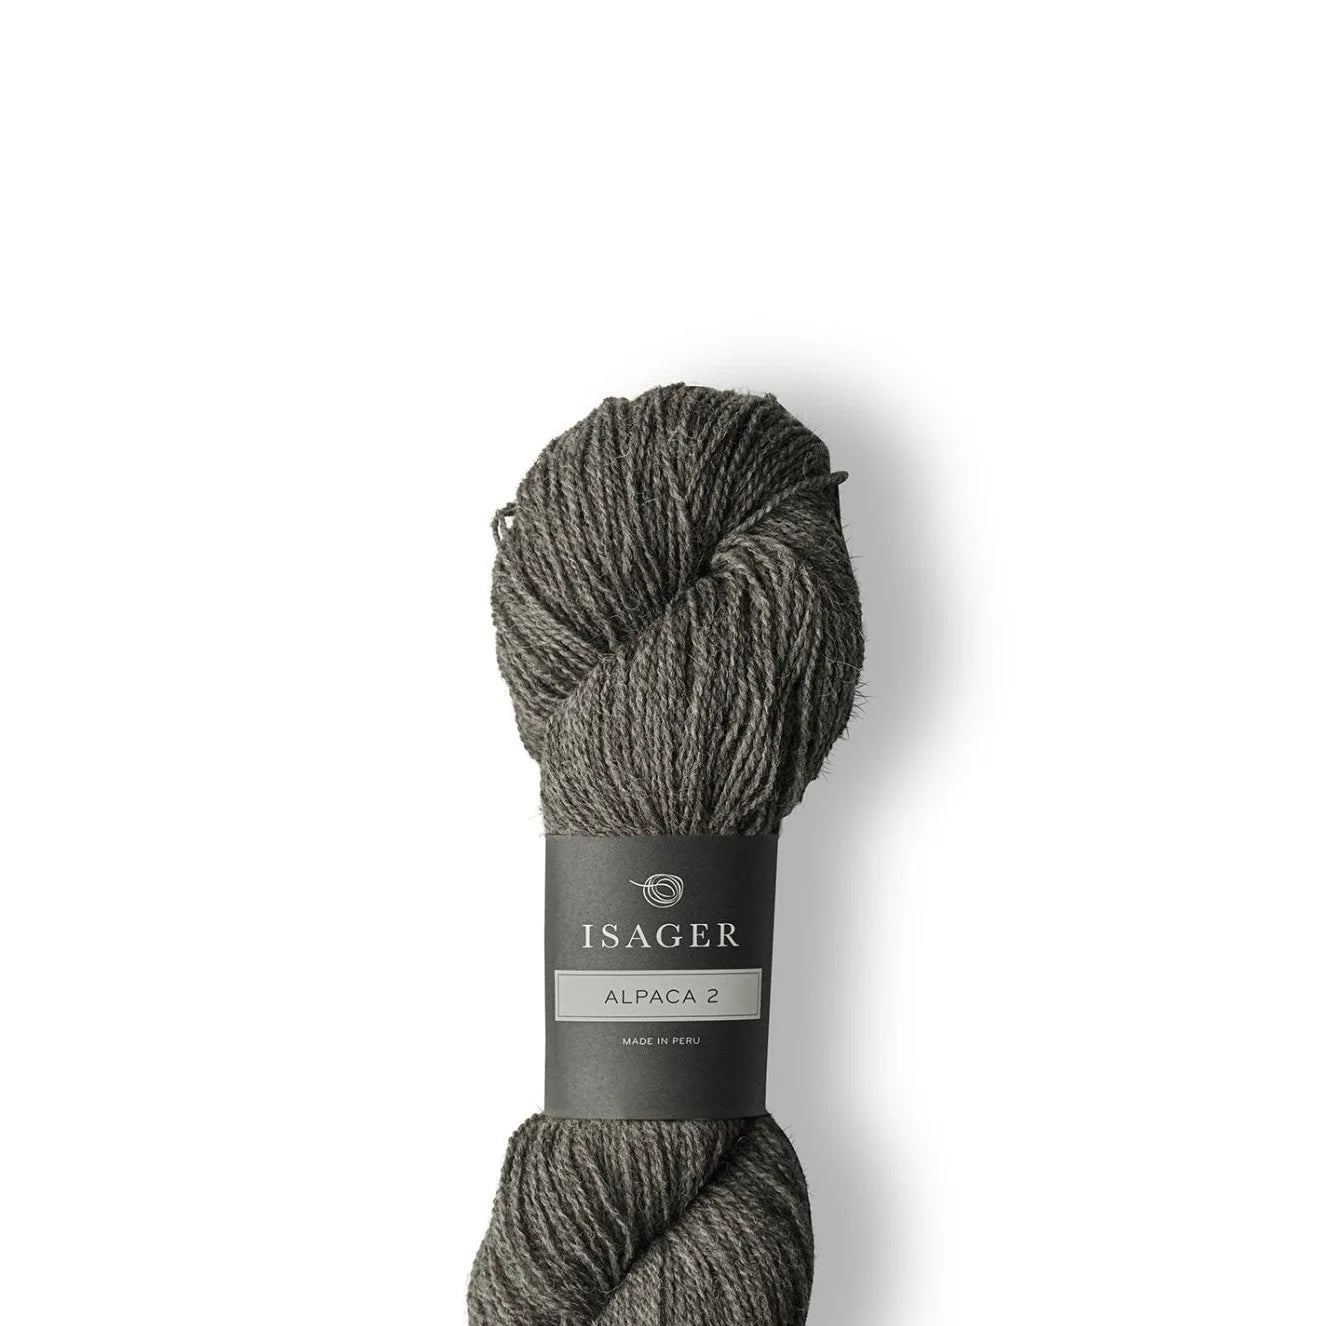 Isager Alpaca 2 - 4s - 4 Ply - Alpaca - The Little Yarn Store